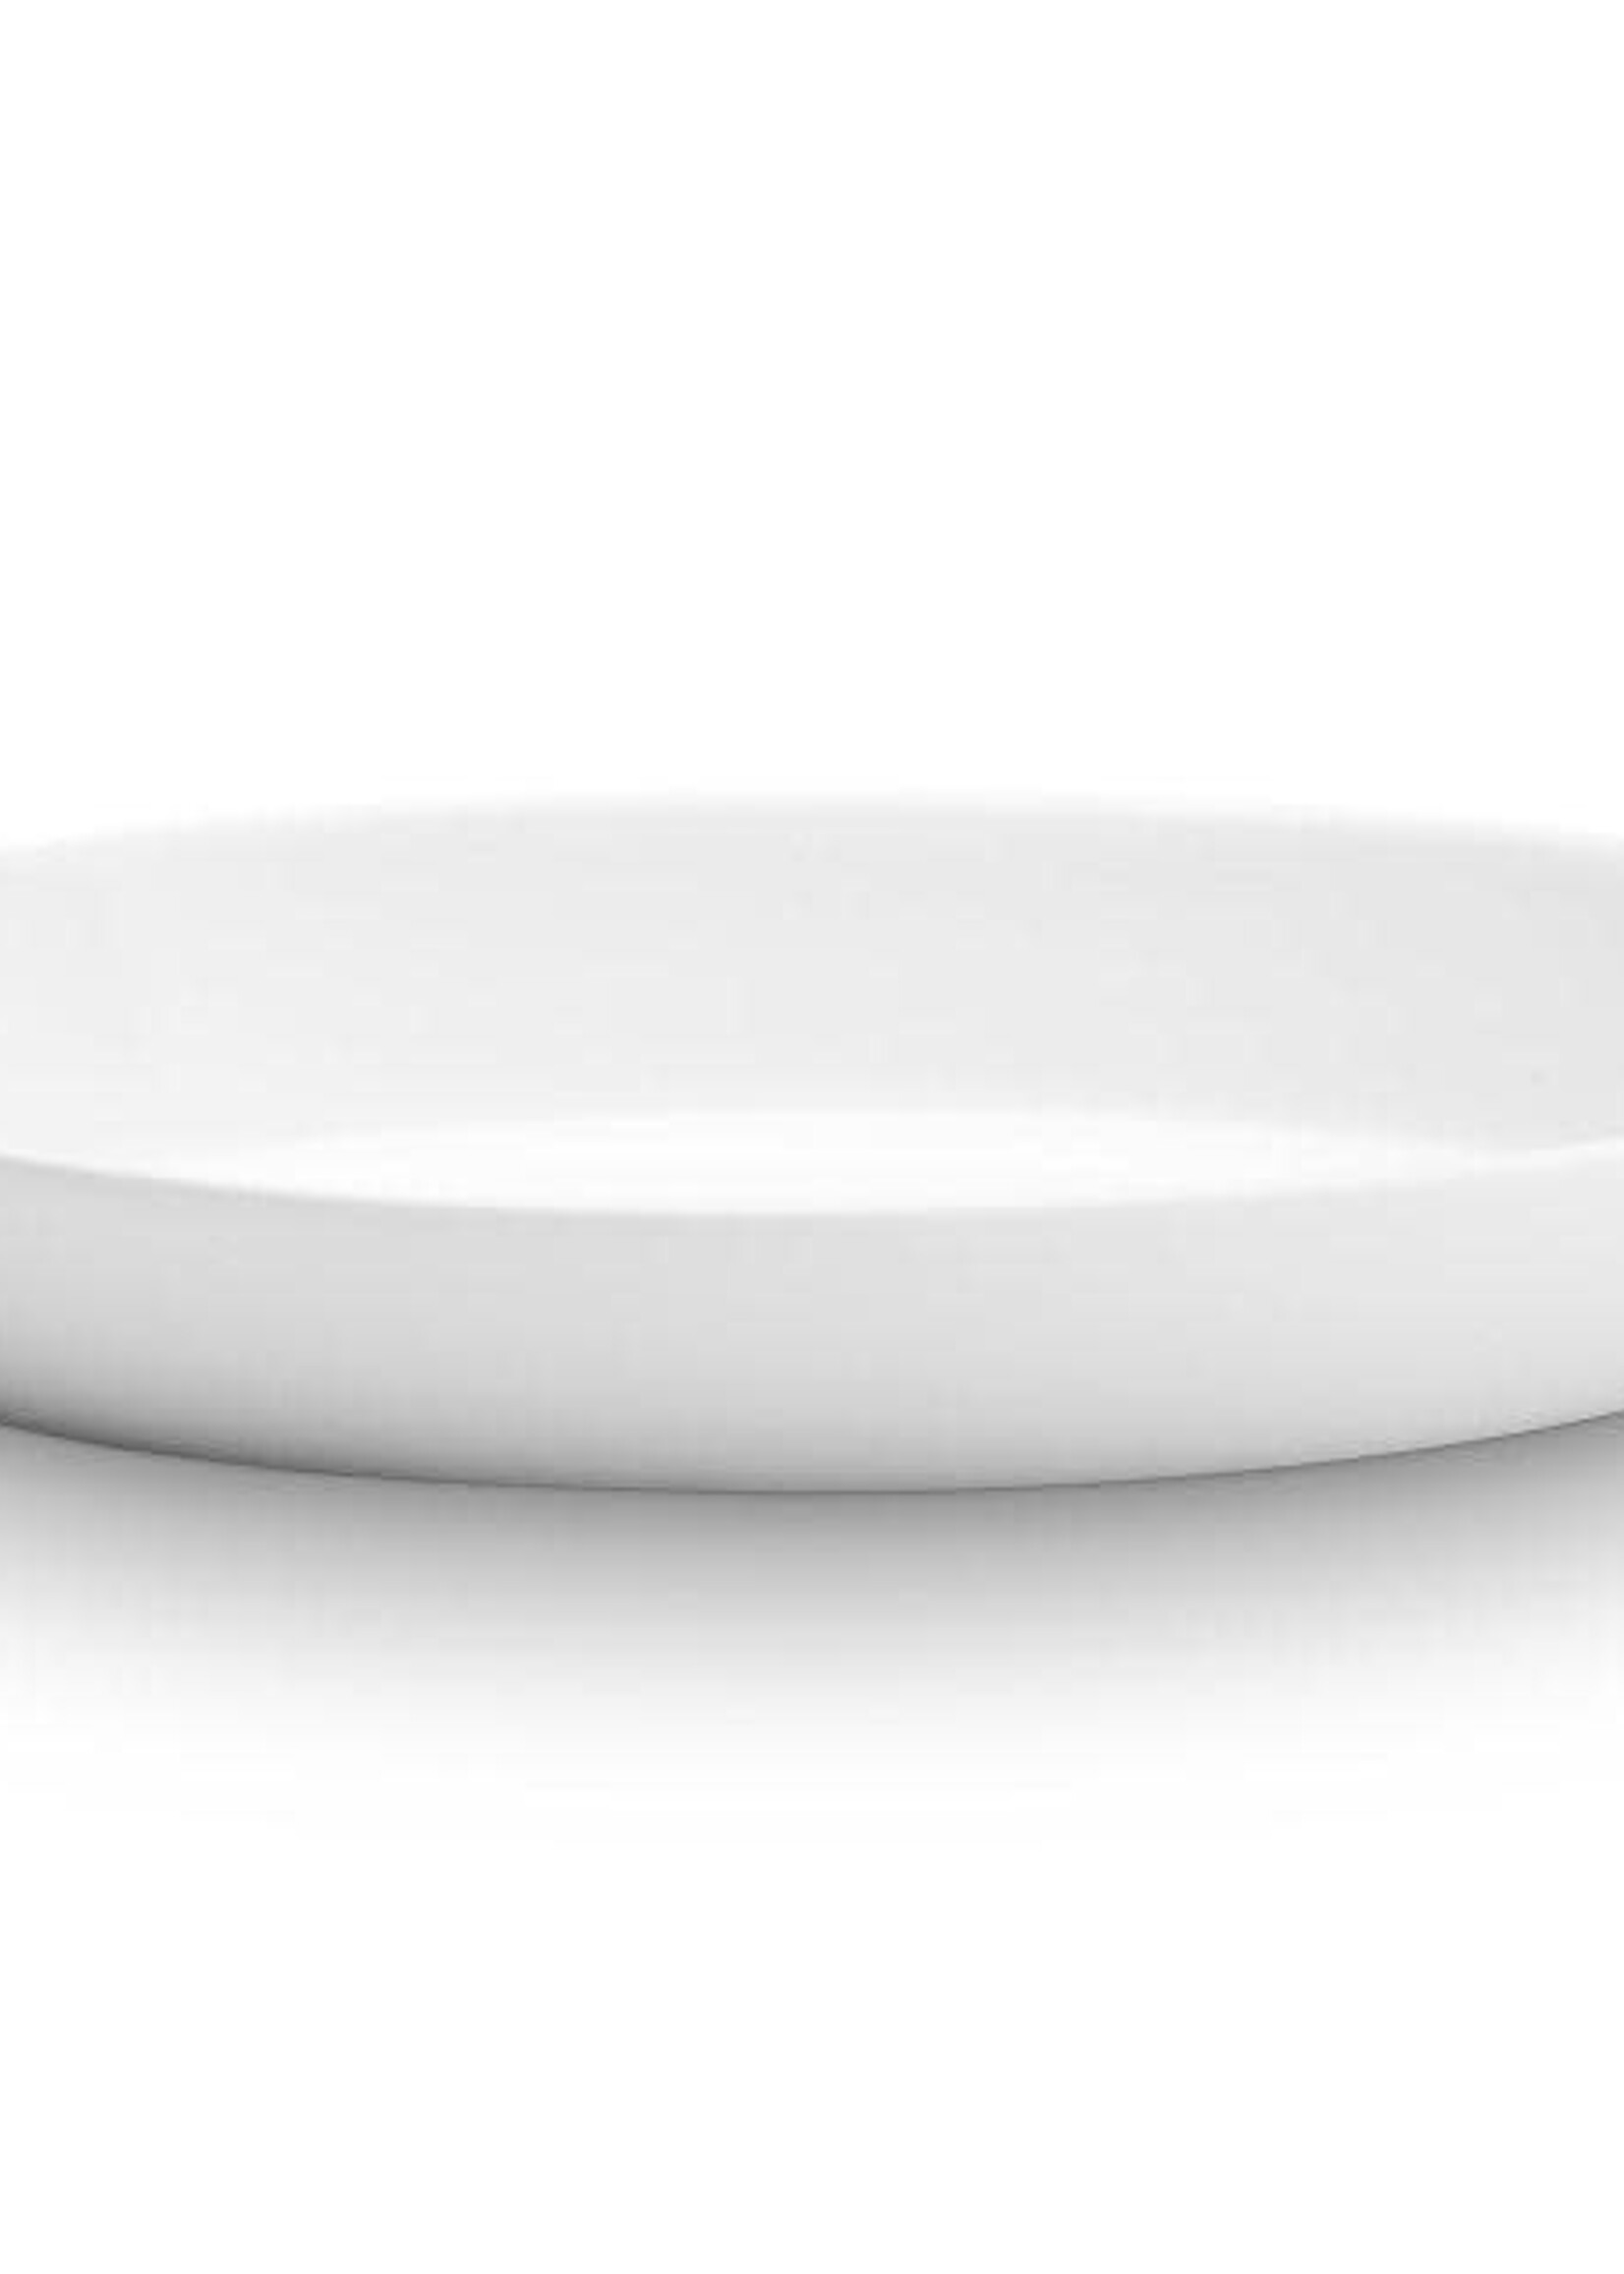 Pillivuyt Oval Eared Dish 8.5"x5"